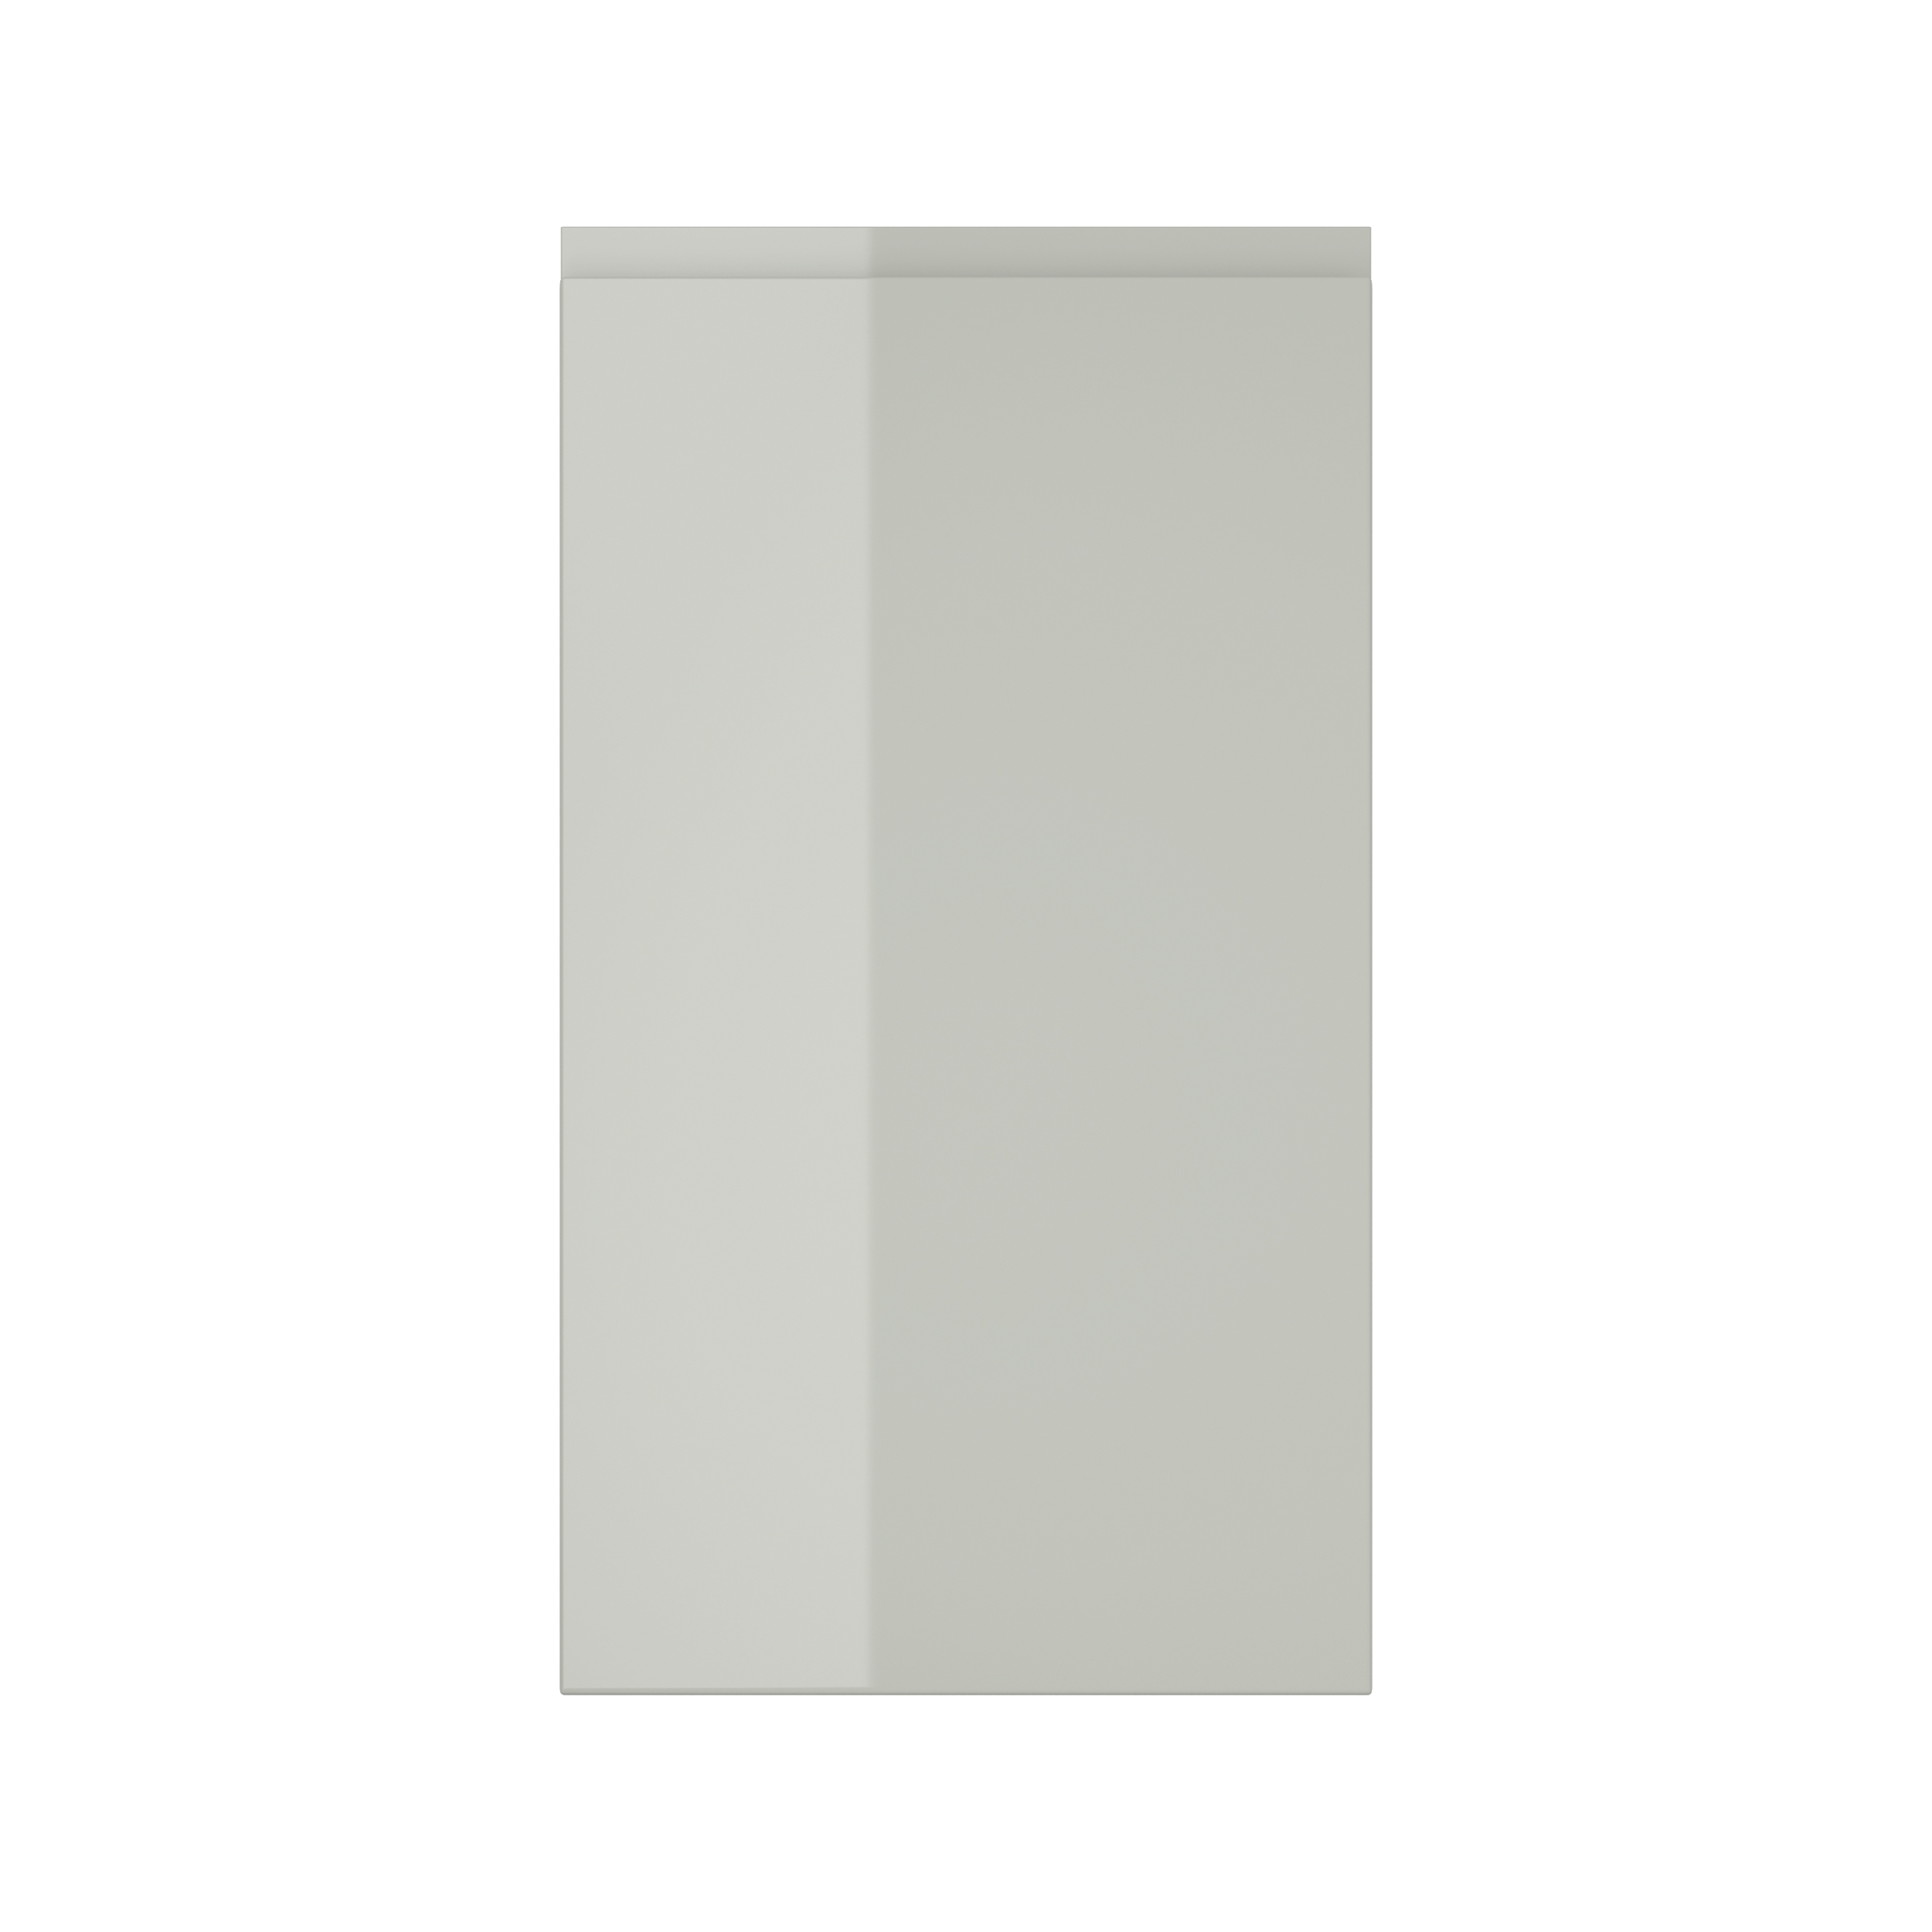 570 X 447 - Strada Light Grey Gloss